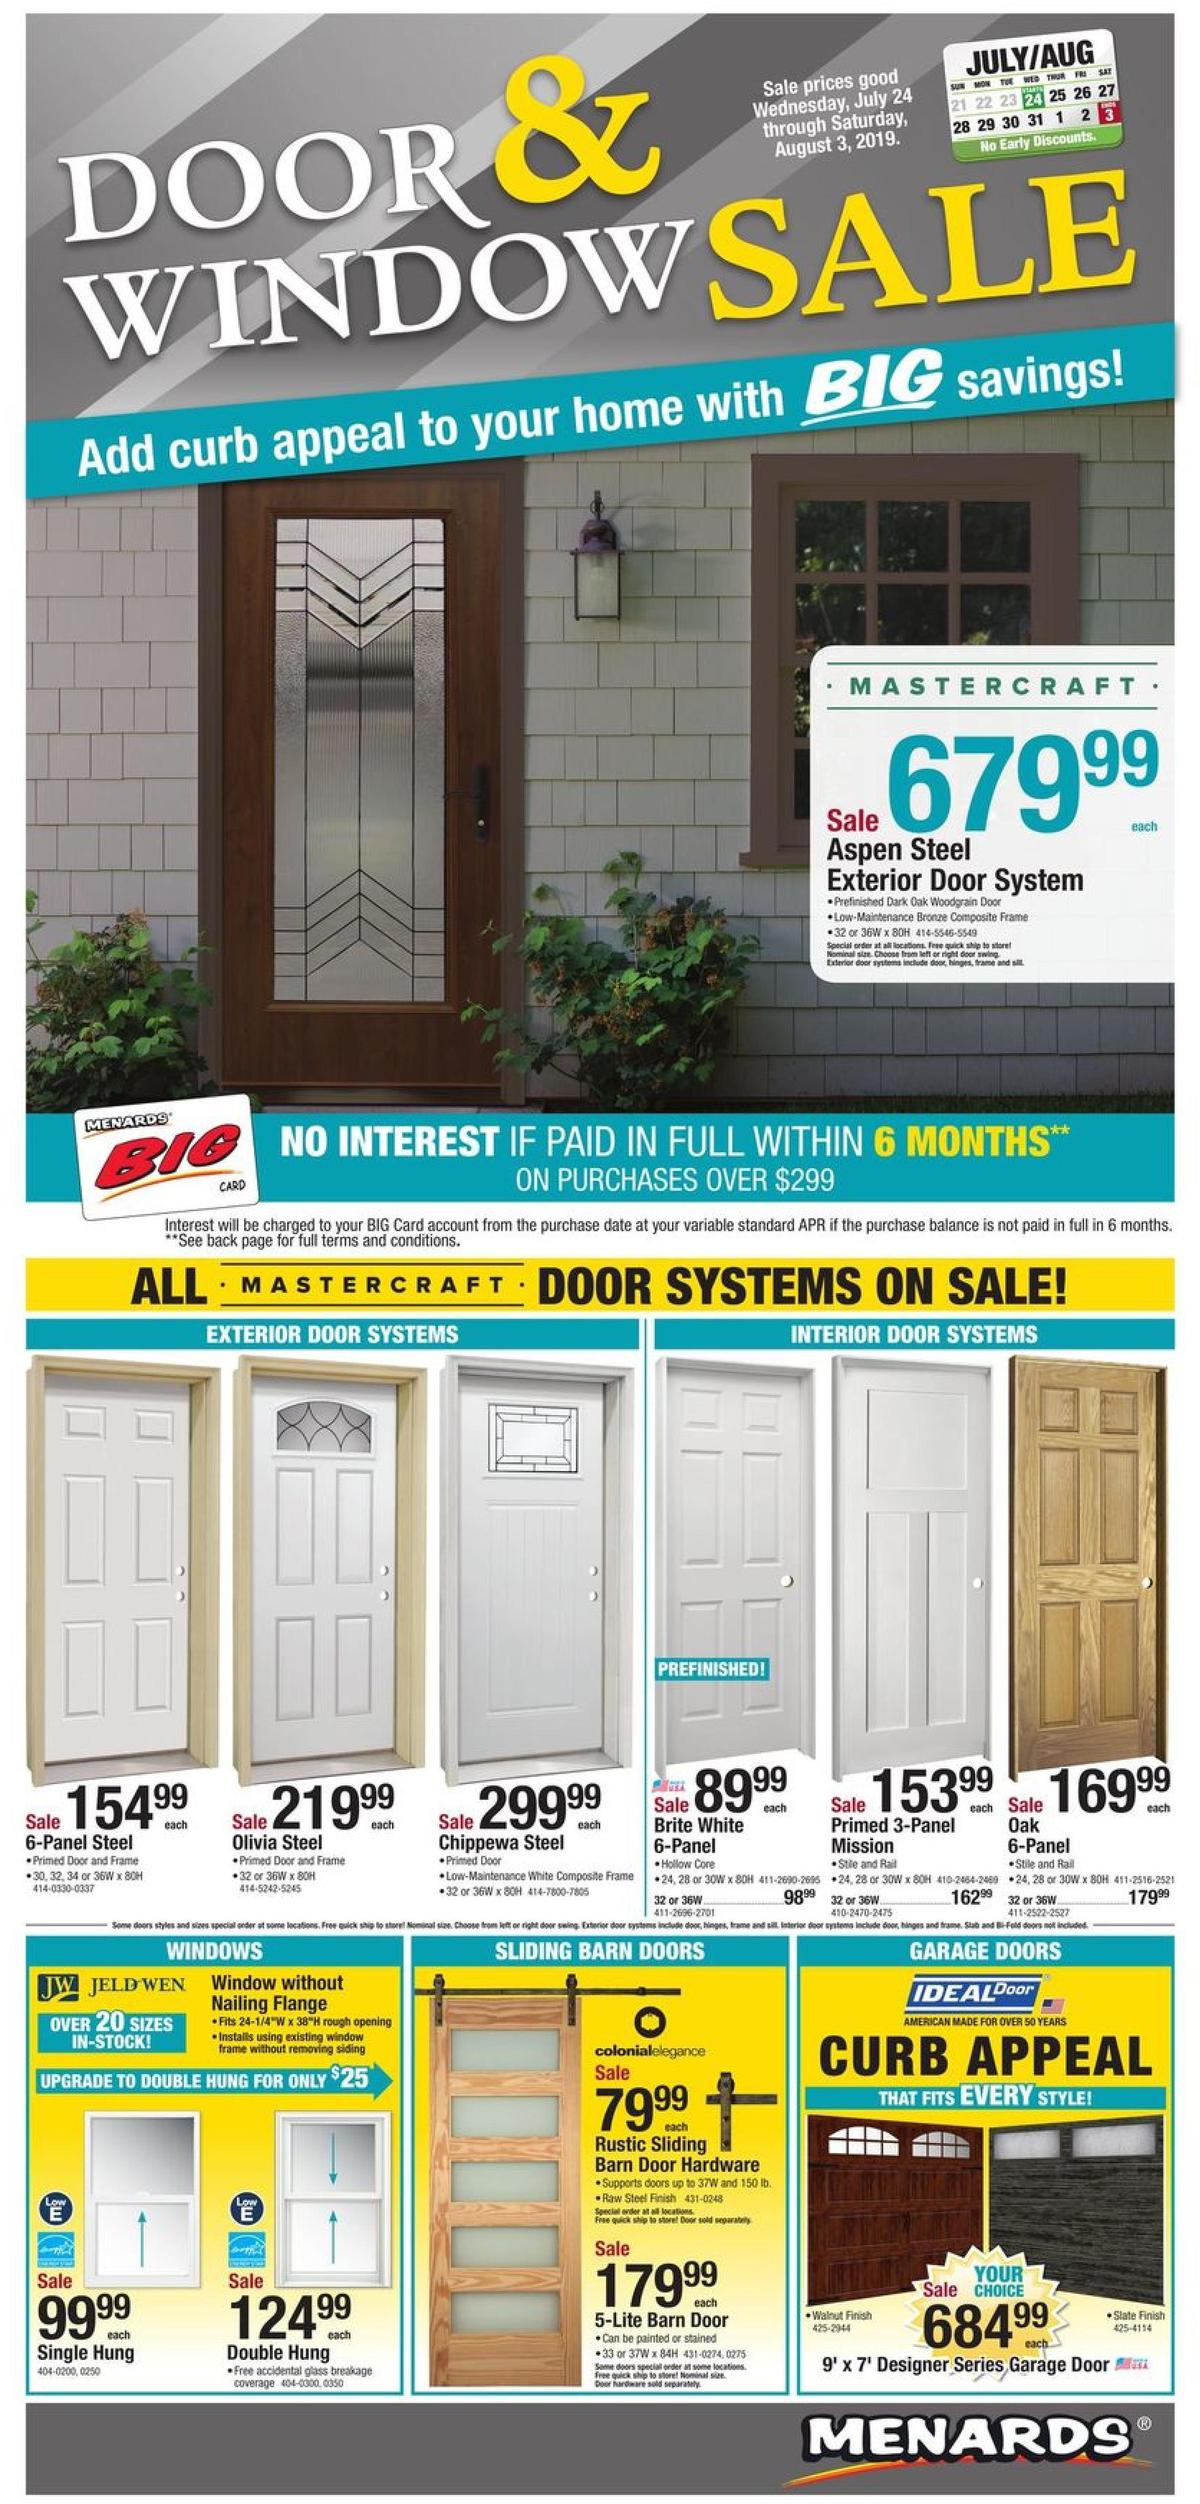 Menards Door and Window Sale Weekly Ad from July 24